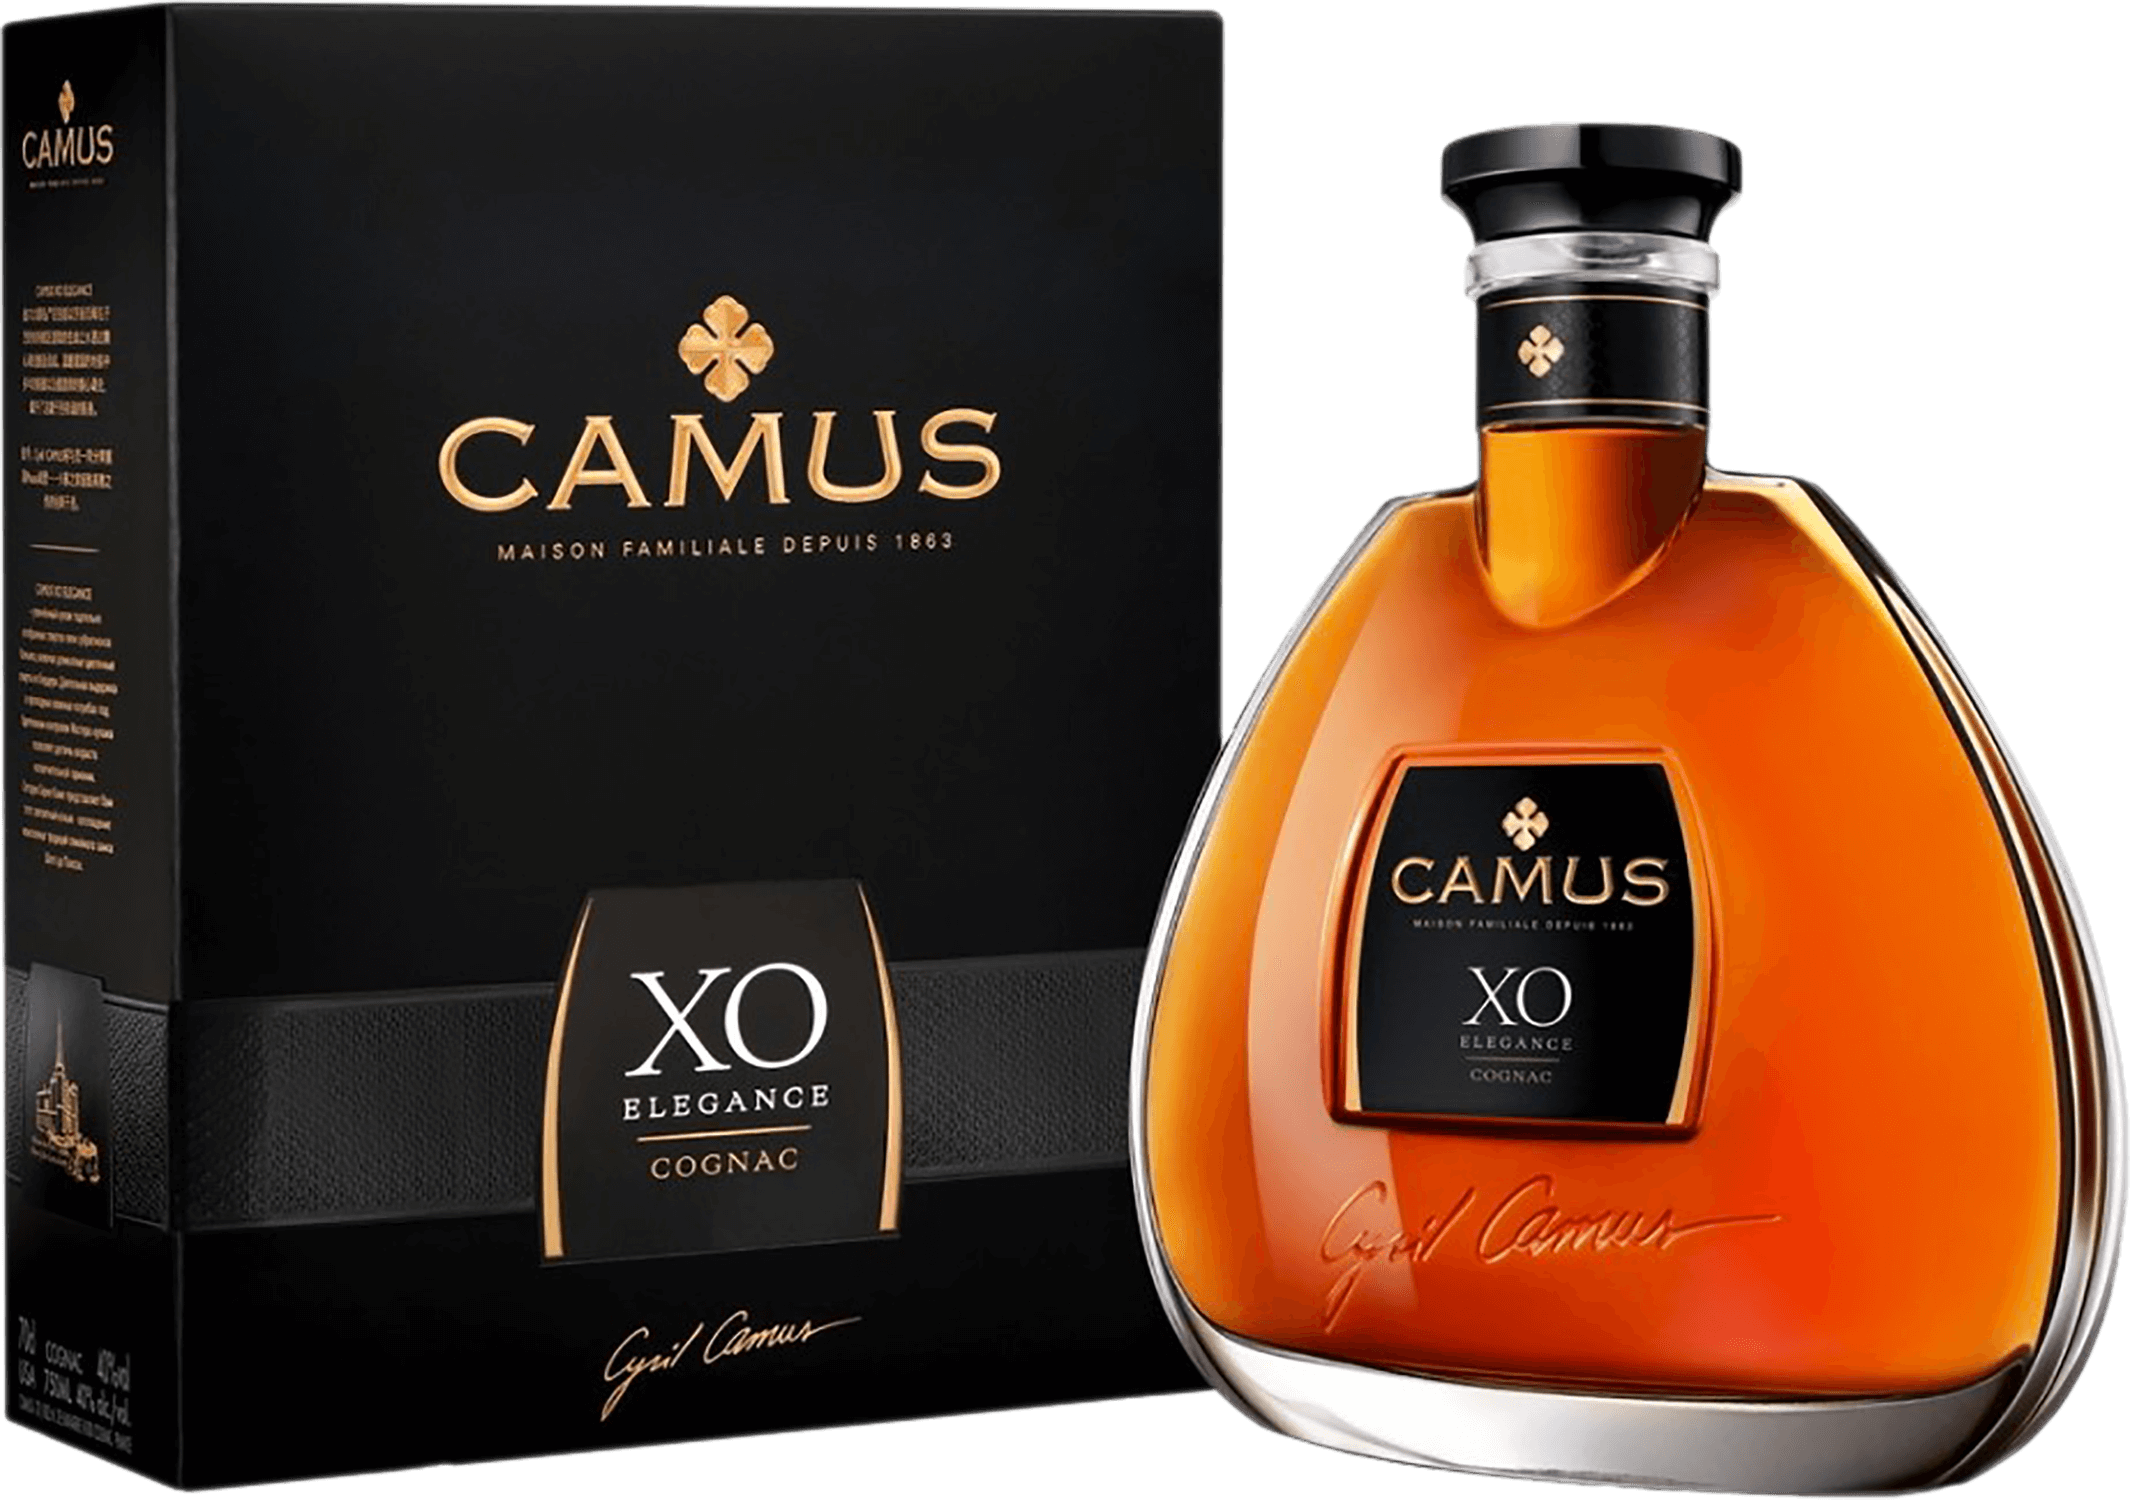 Camus Elegance Cognac XO (gift box) camus vs gift box